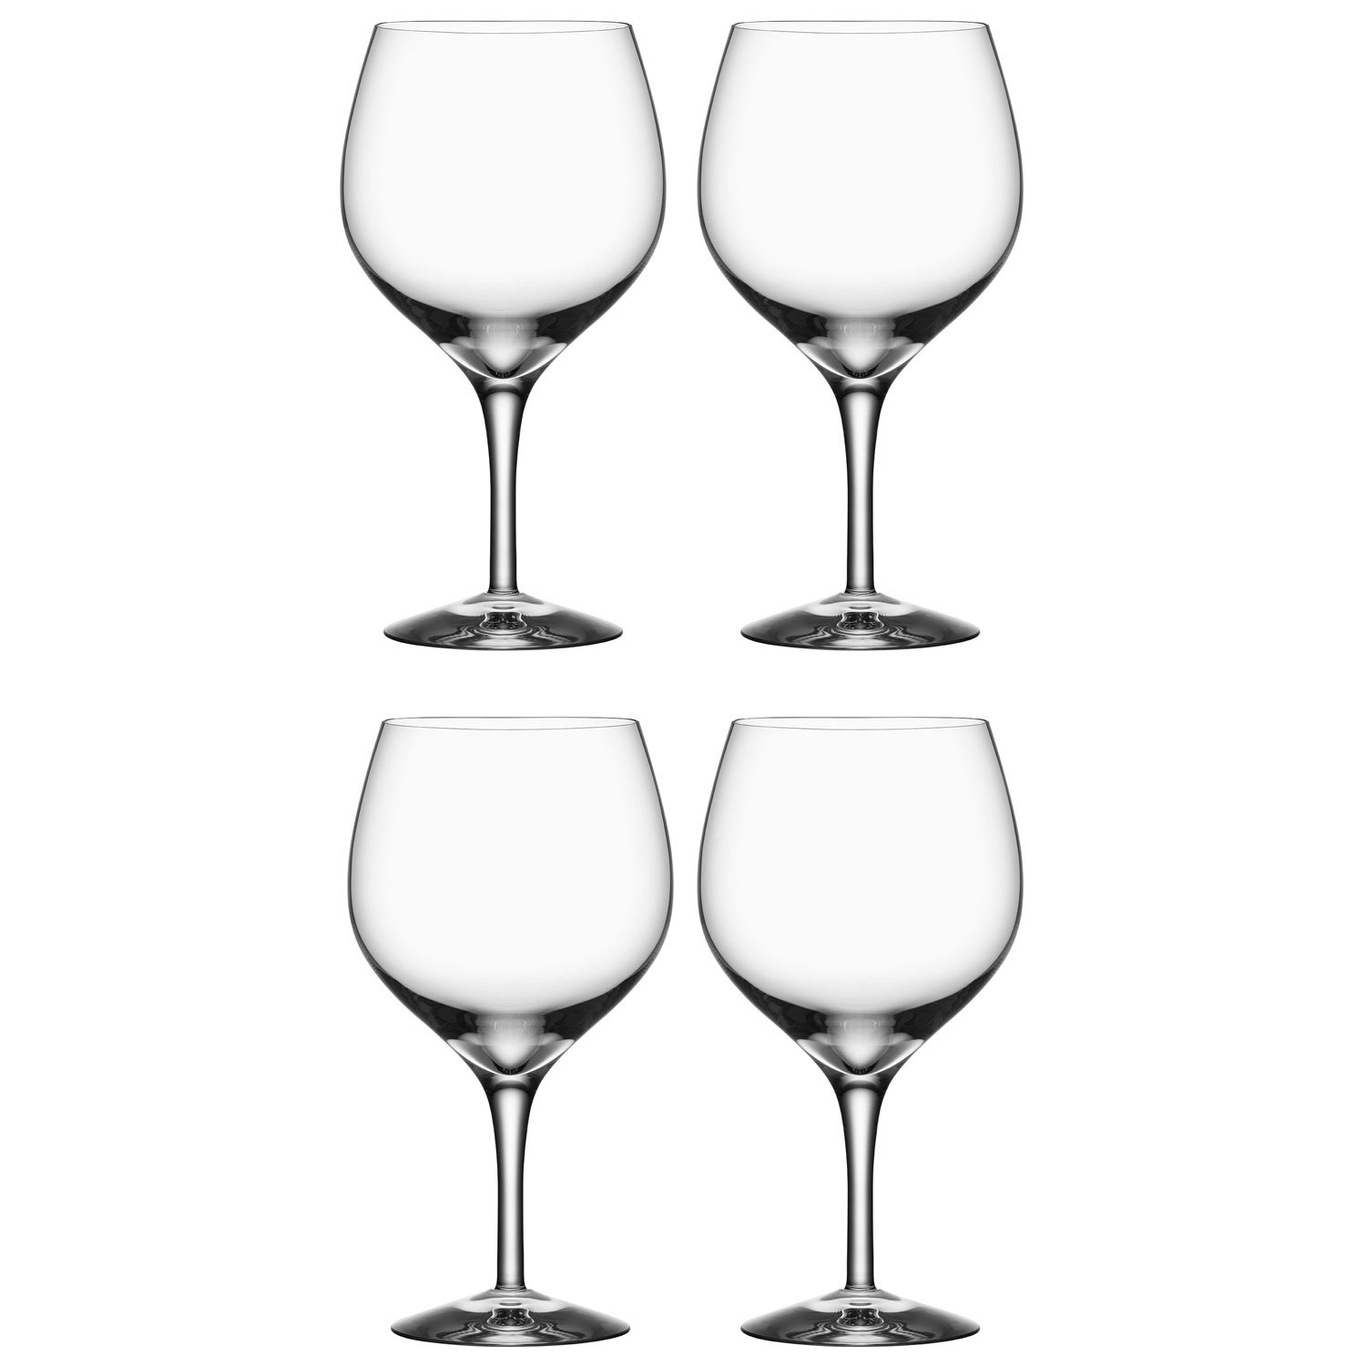 https://royaldesign.com/image/2/orrefors-gin-tonic-glass-64-cl-4-pcs-0?w=800&quality=80